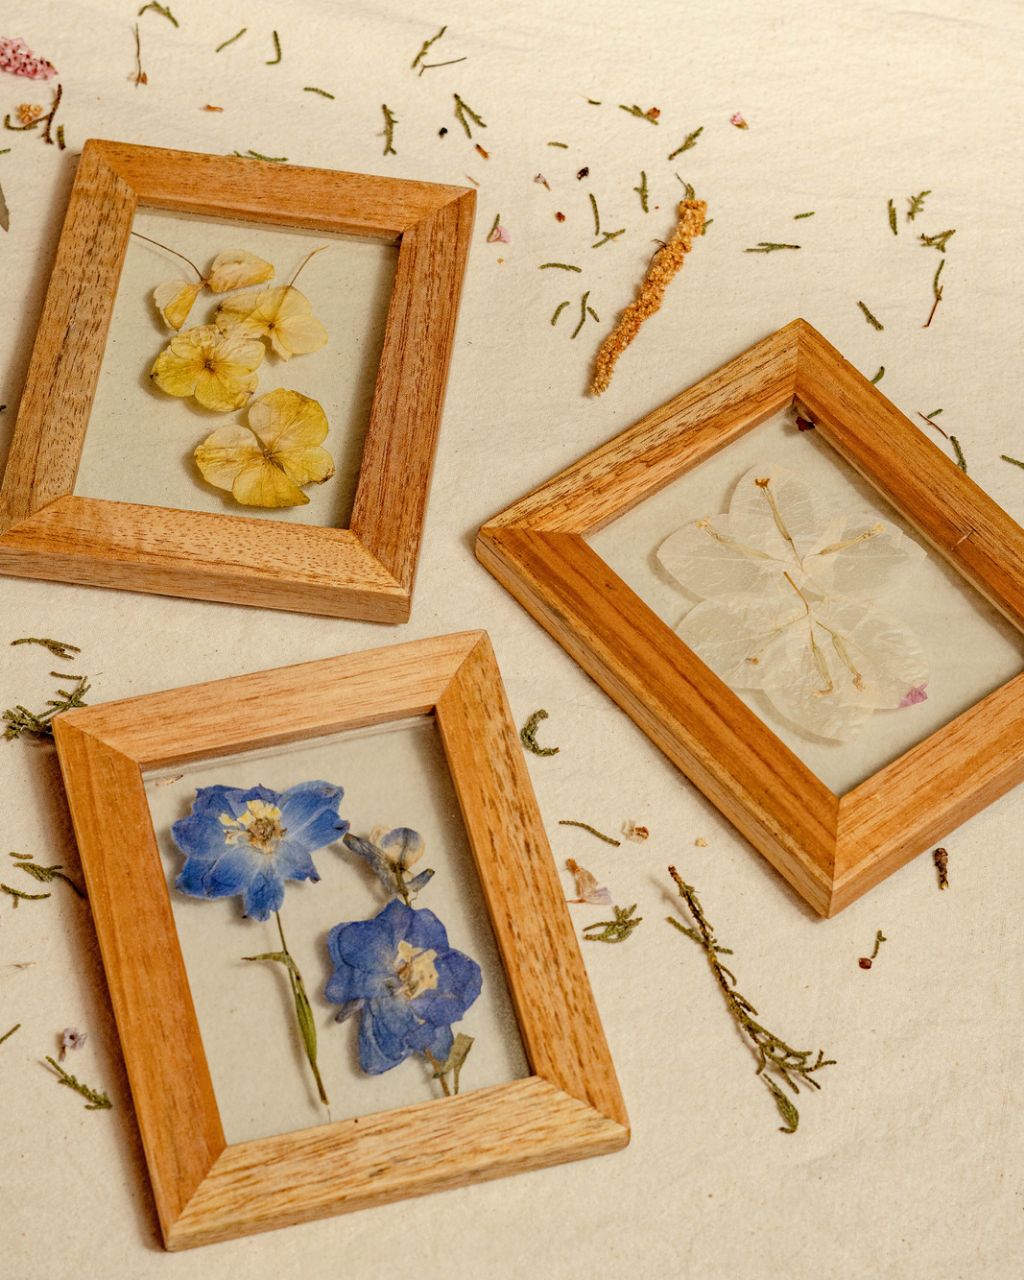 Colección de cuadros con flores prensadas entre vidrios